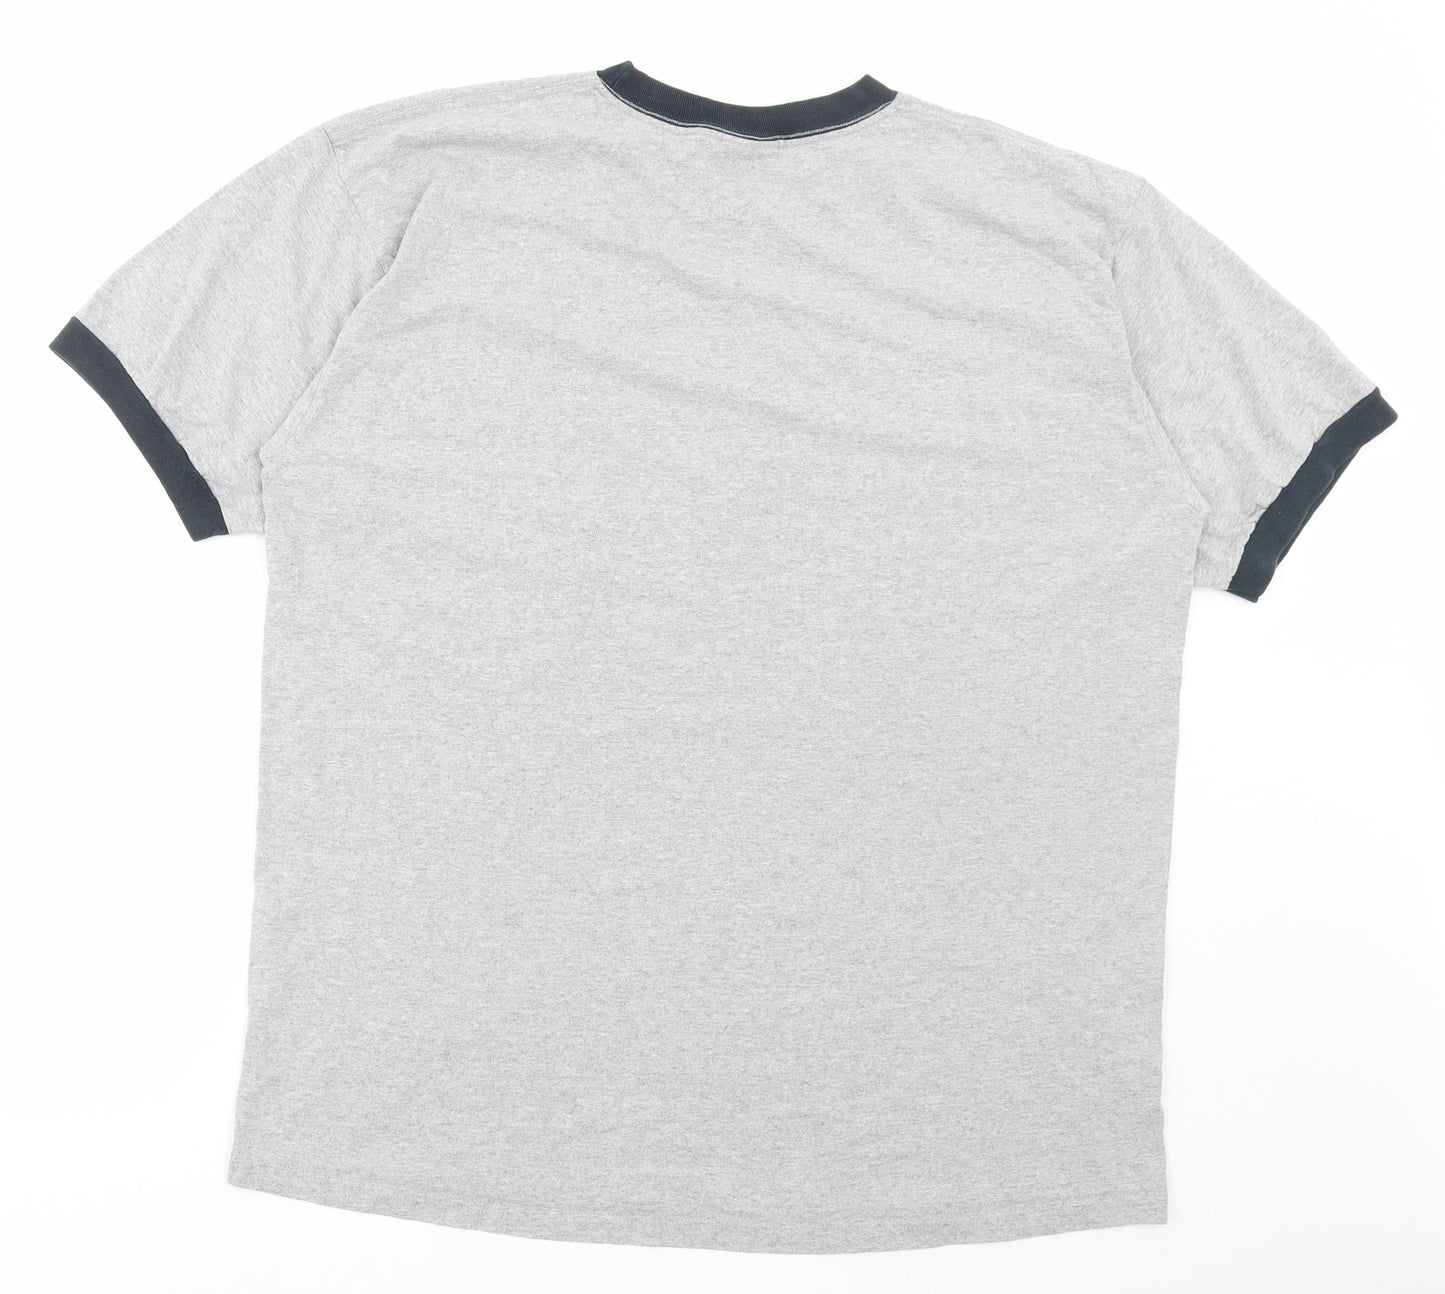 Disney Store Mens Grey Cotton T-Shirt Size XL Round Neck - Mickey Mouse